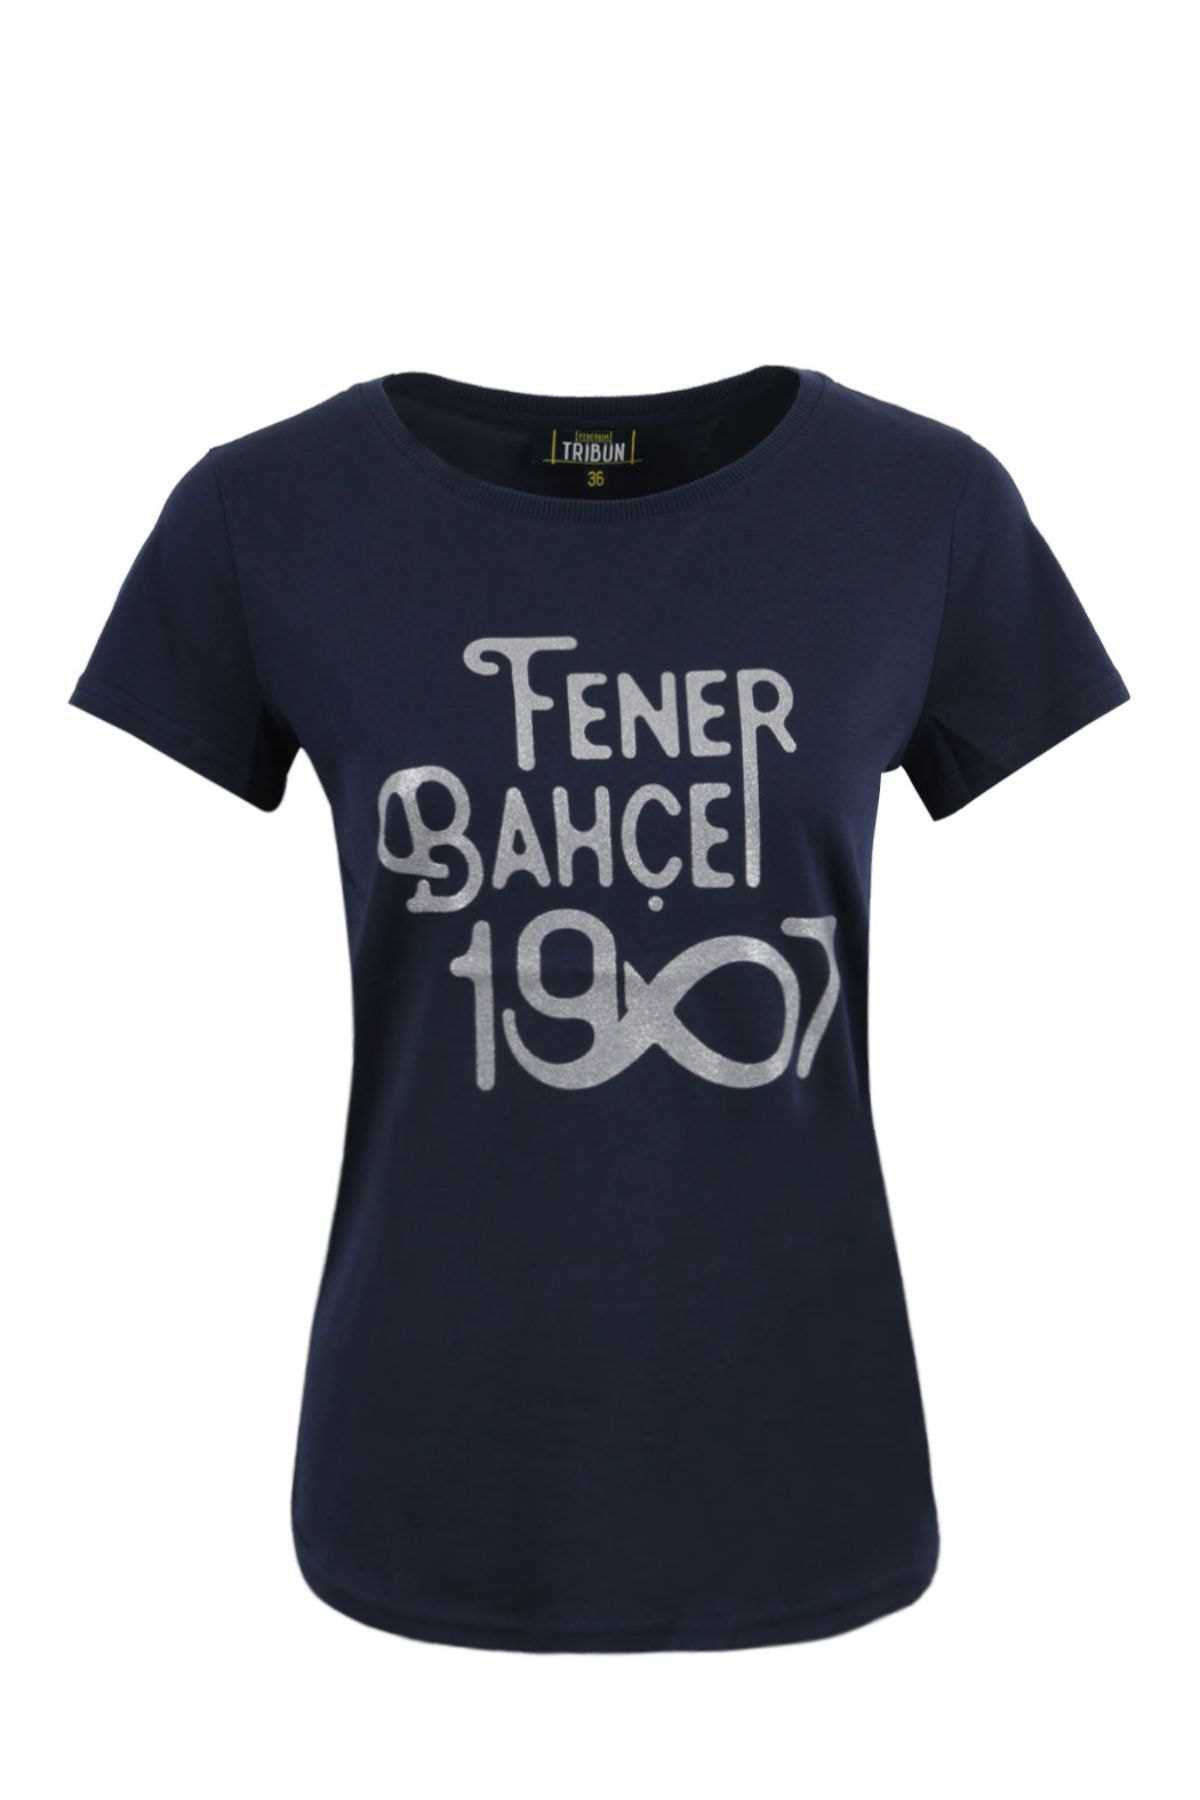 خرید نقدی تیشرت ورزشی زنانه  شیک Fenerbahçe رنگ لاجوردی کد ty32497120